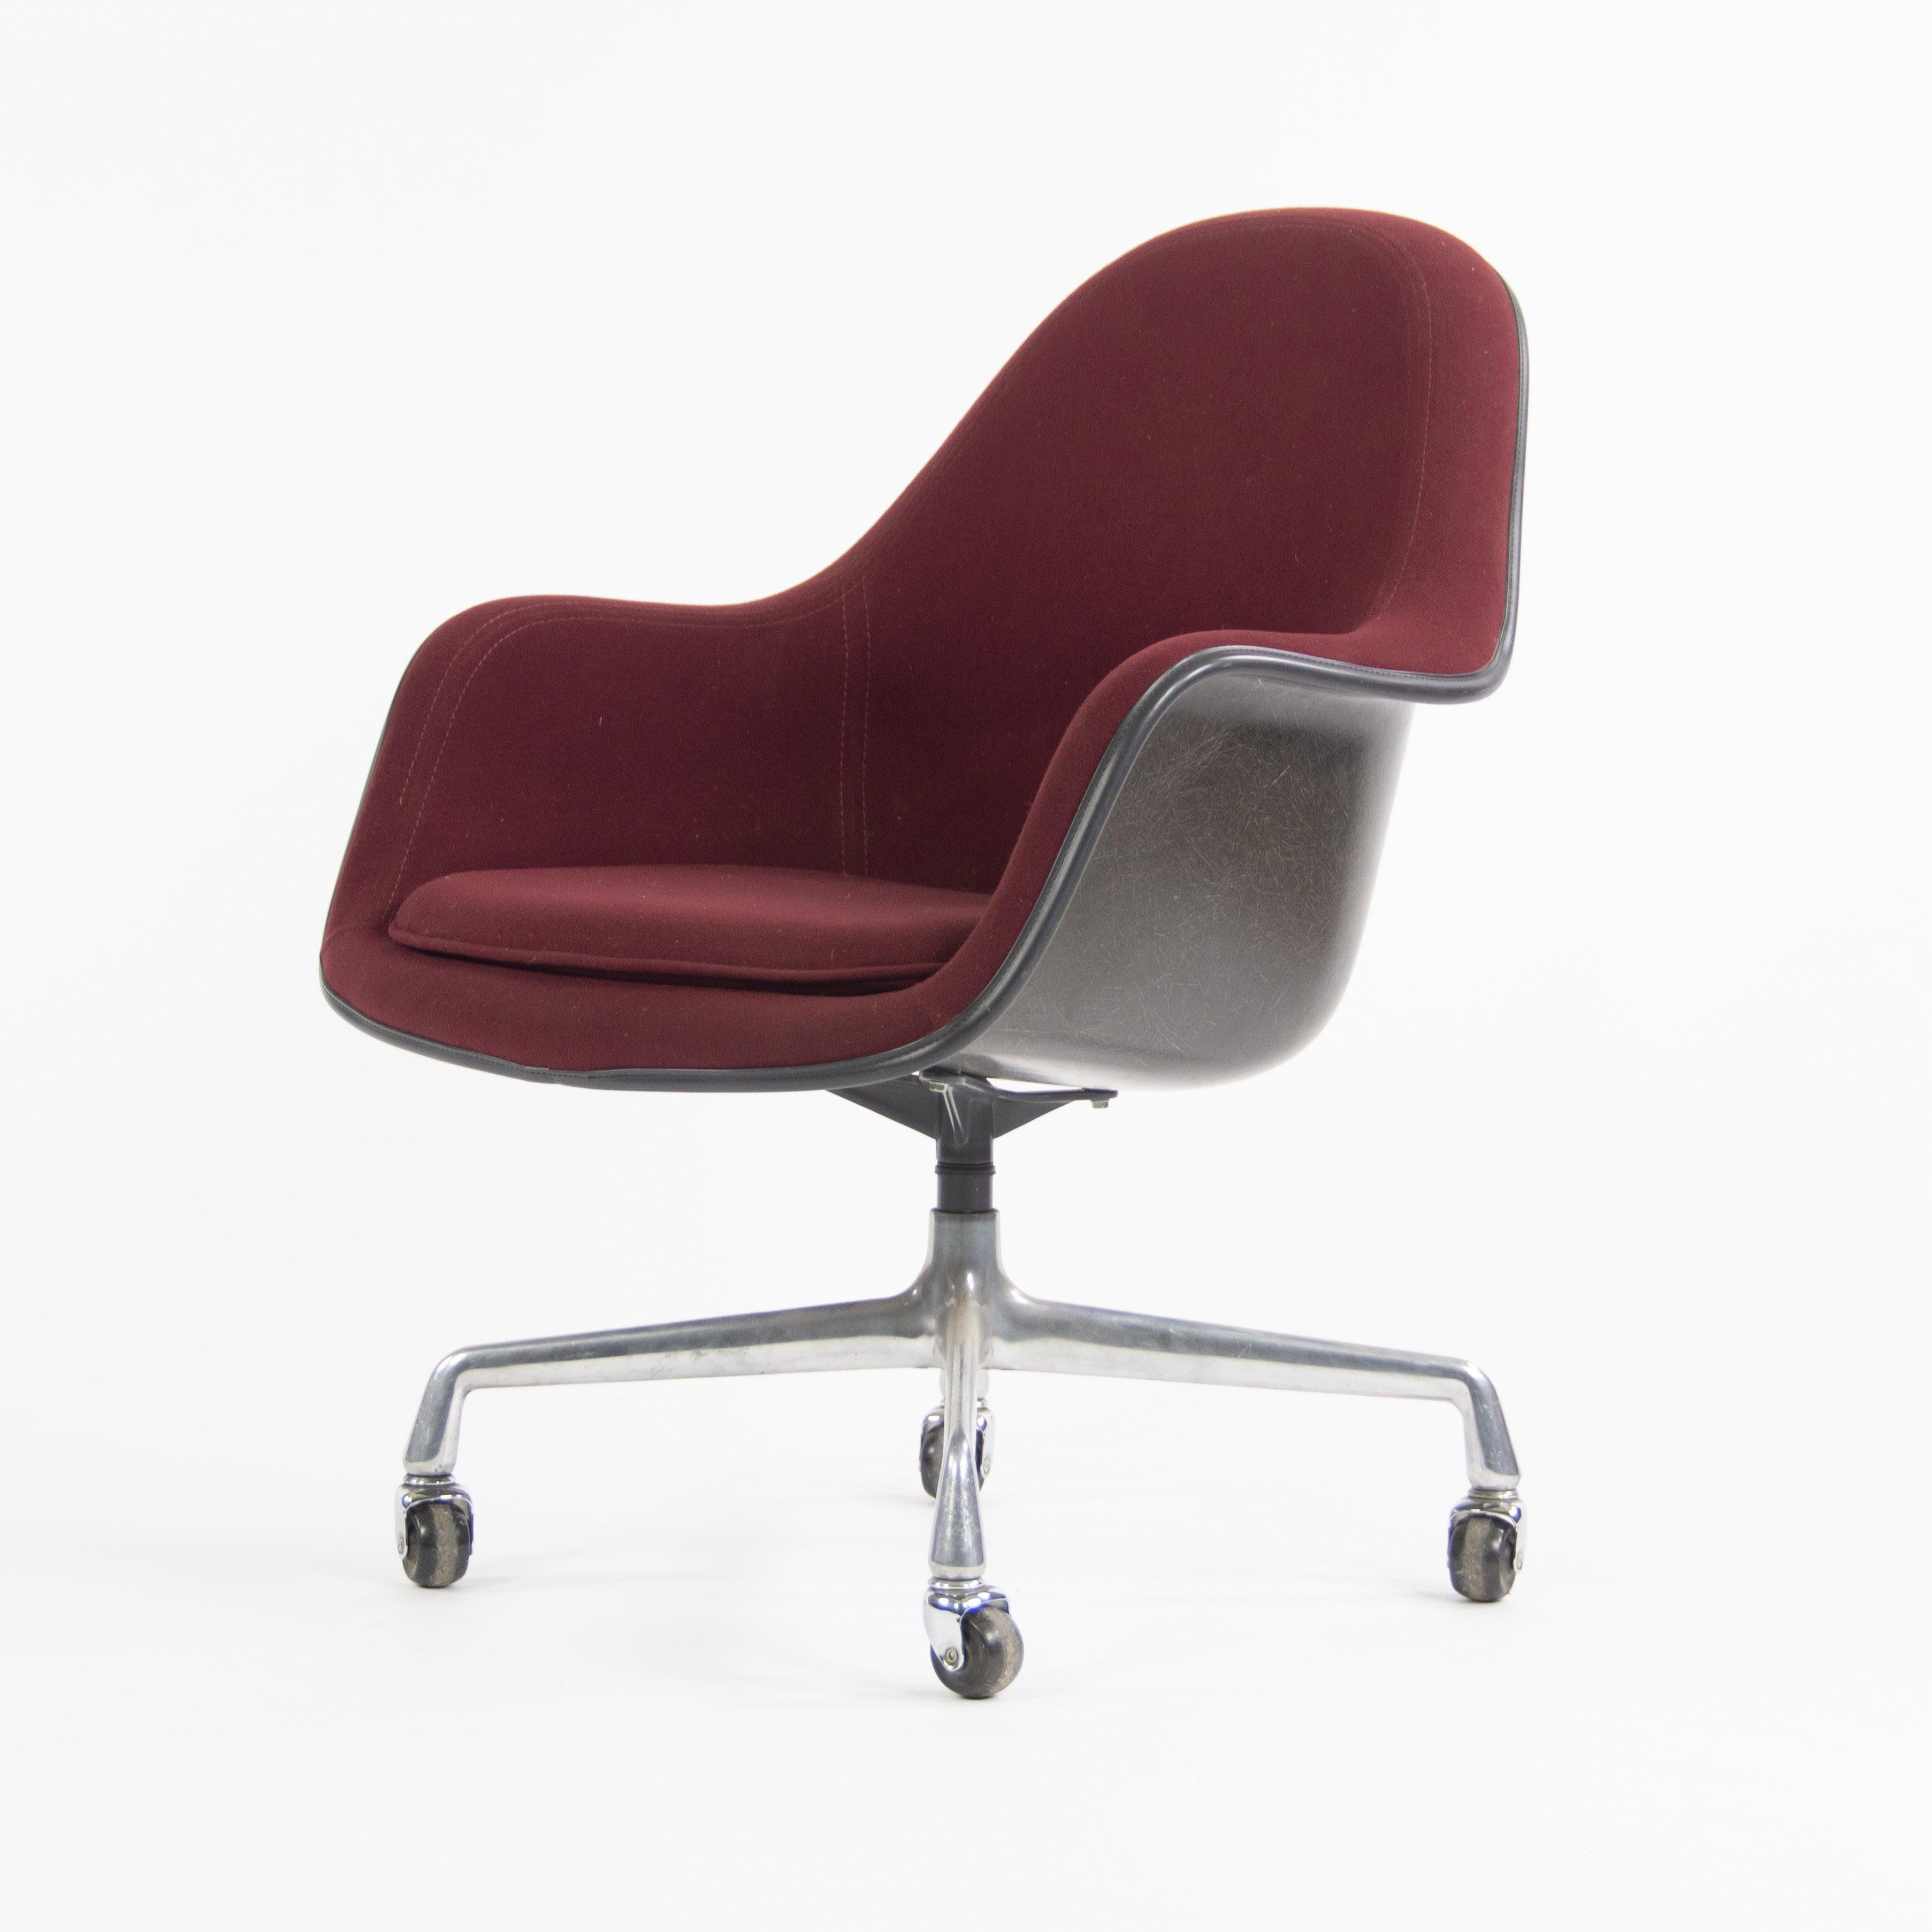 1985 Eames Herman Miller EC175 Upholstered Fiberglass Shell Chair Museum Quality For Sale 1